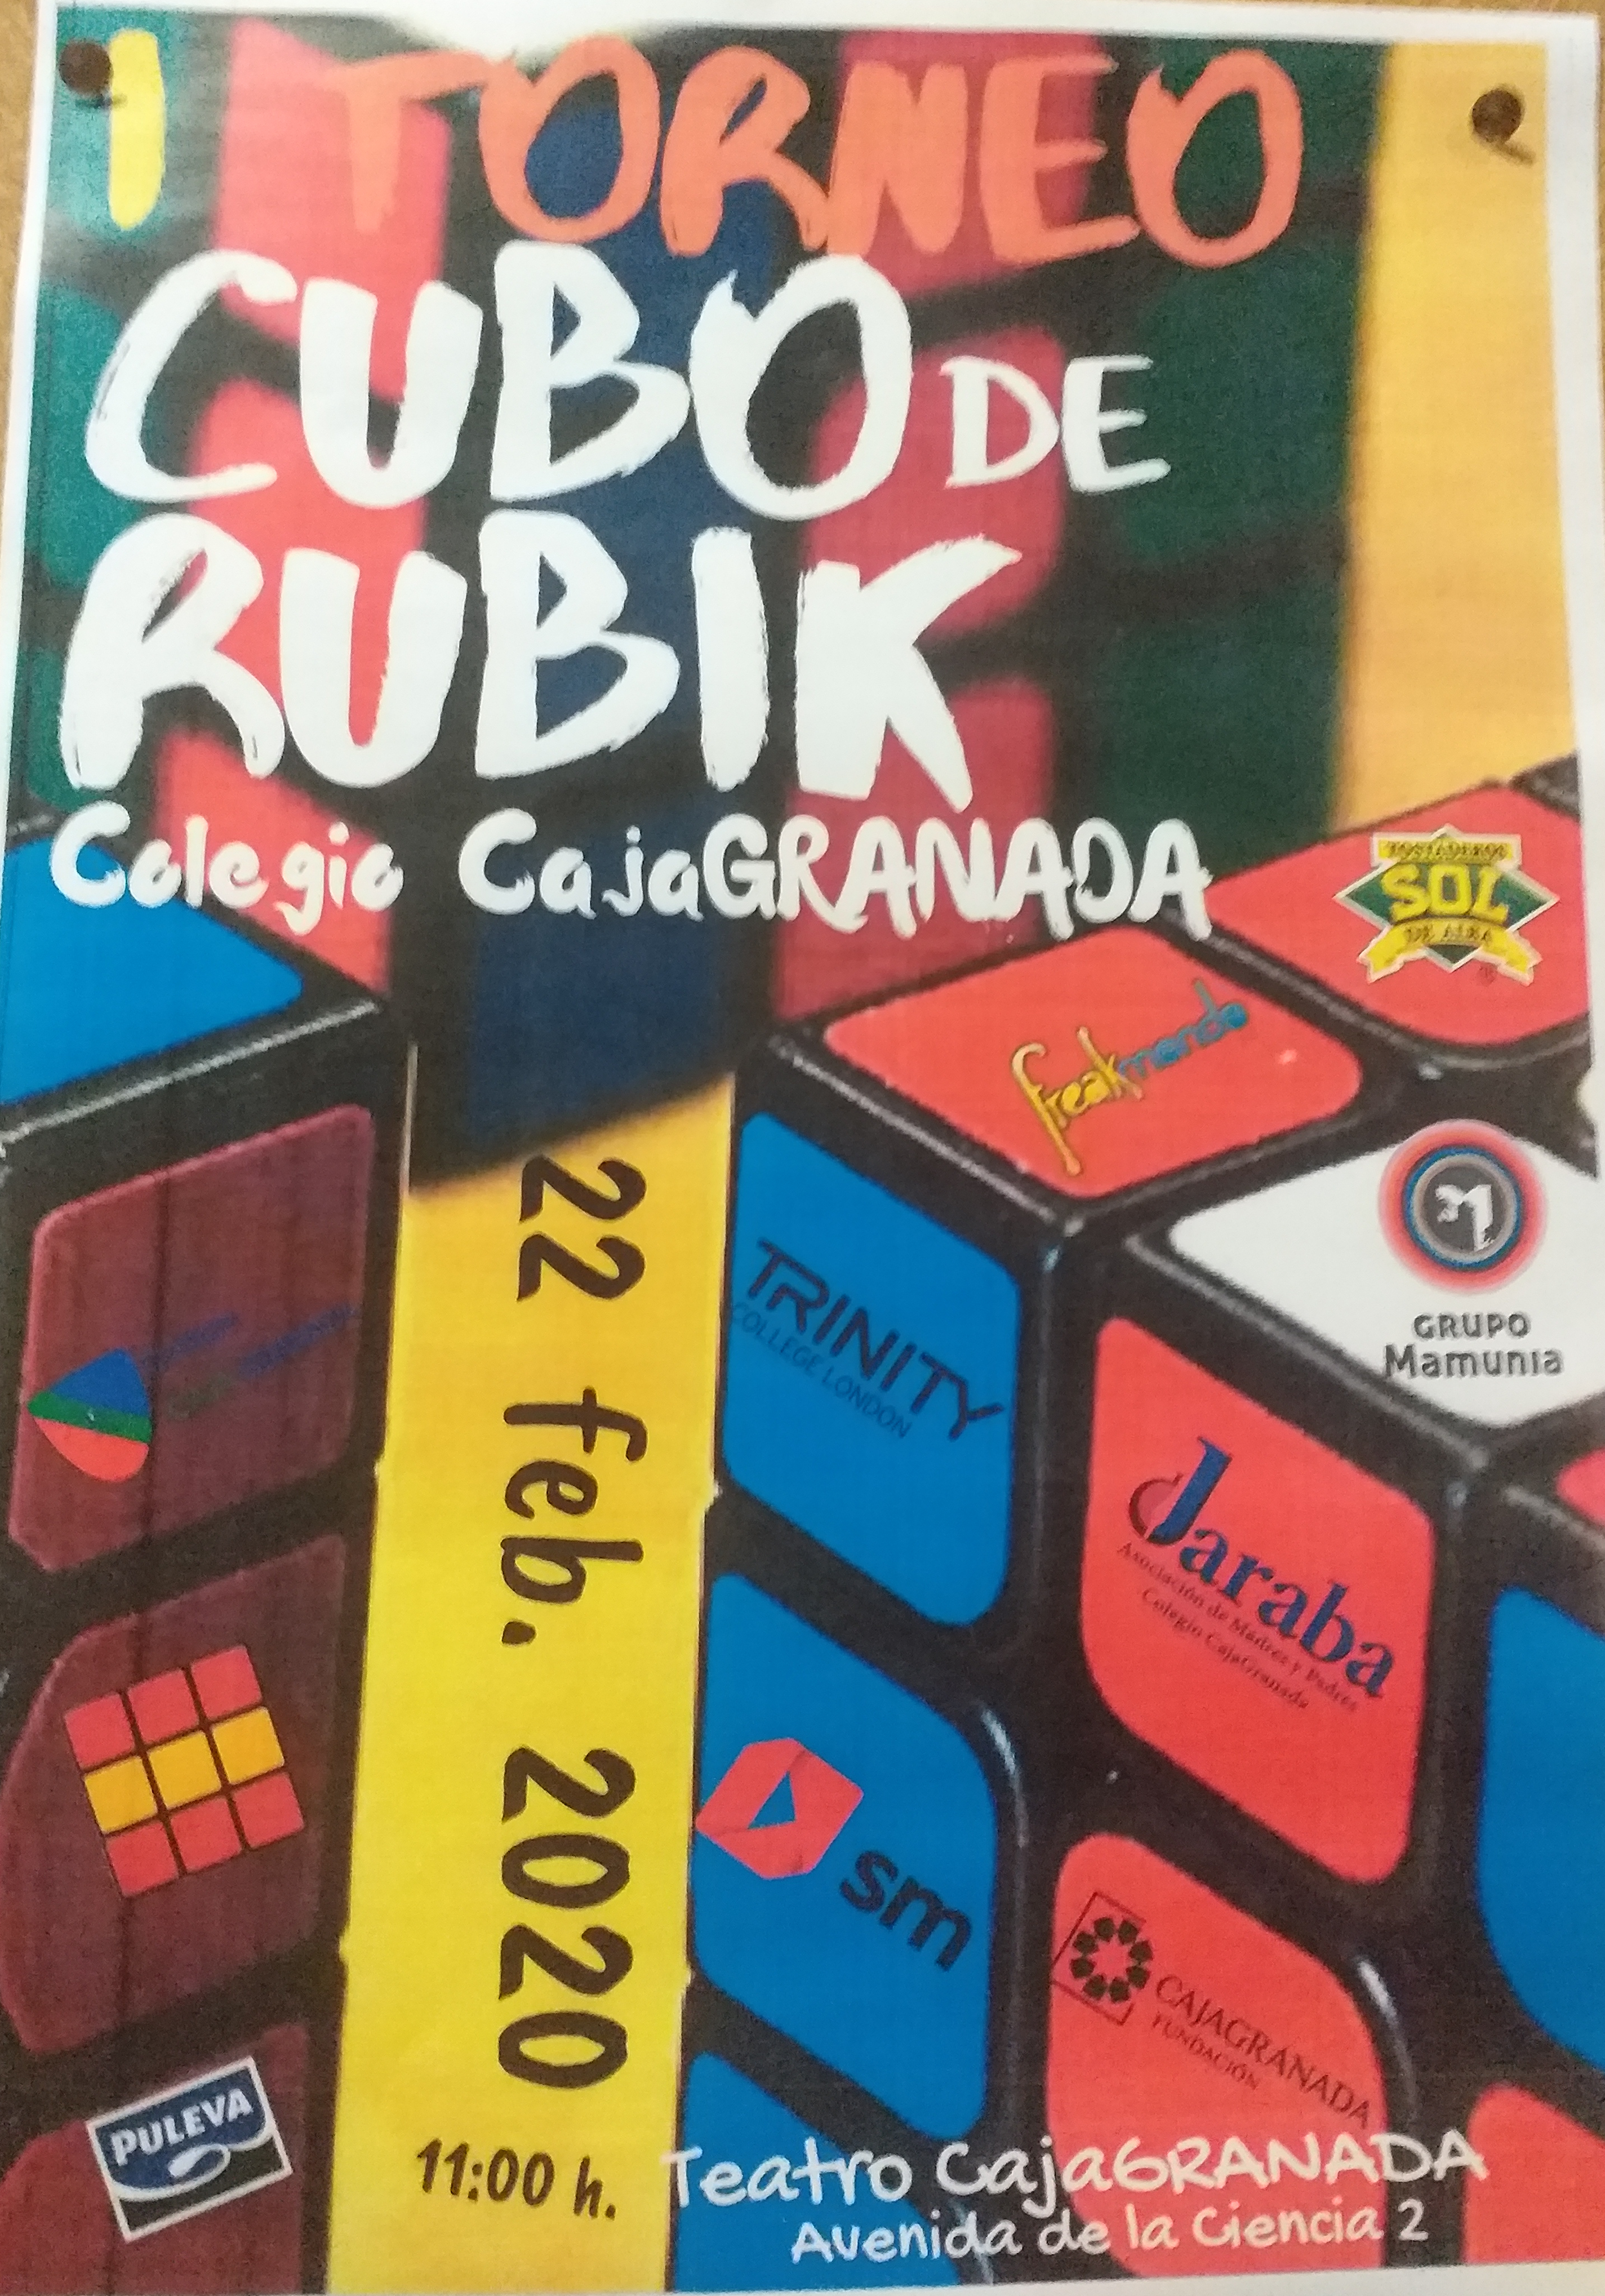 ©Ayto.Granada: Enredate: Torneo Cubo Rubik